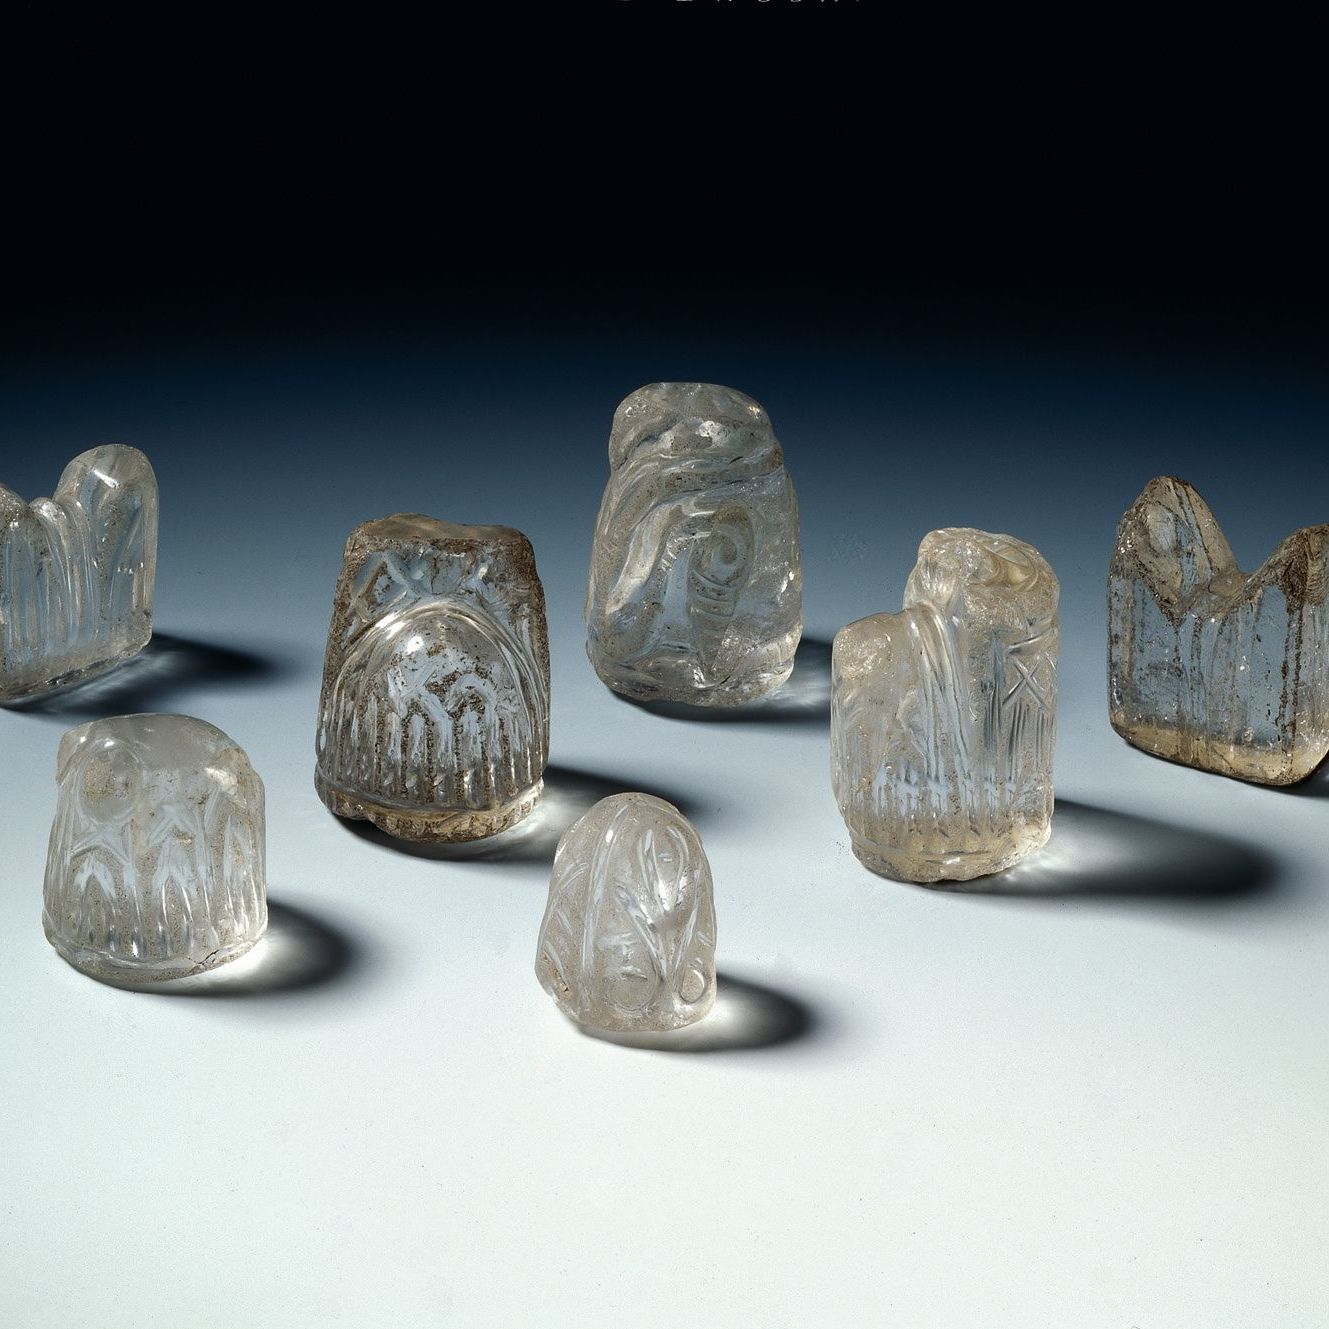 Pièces de jeu de Osnabrück en cristal de roche. Circa Xe - XIIe siècle. © Leo Hovestadt, Picasa